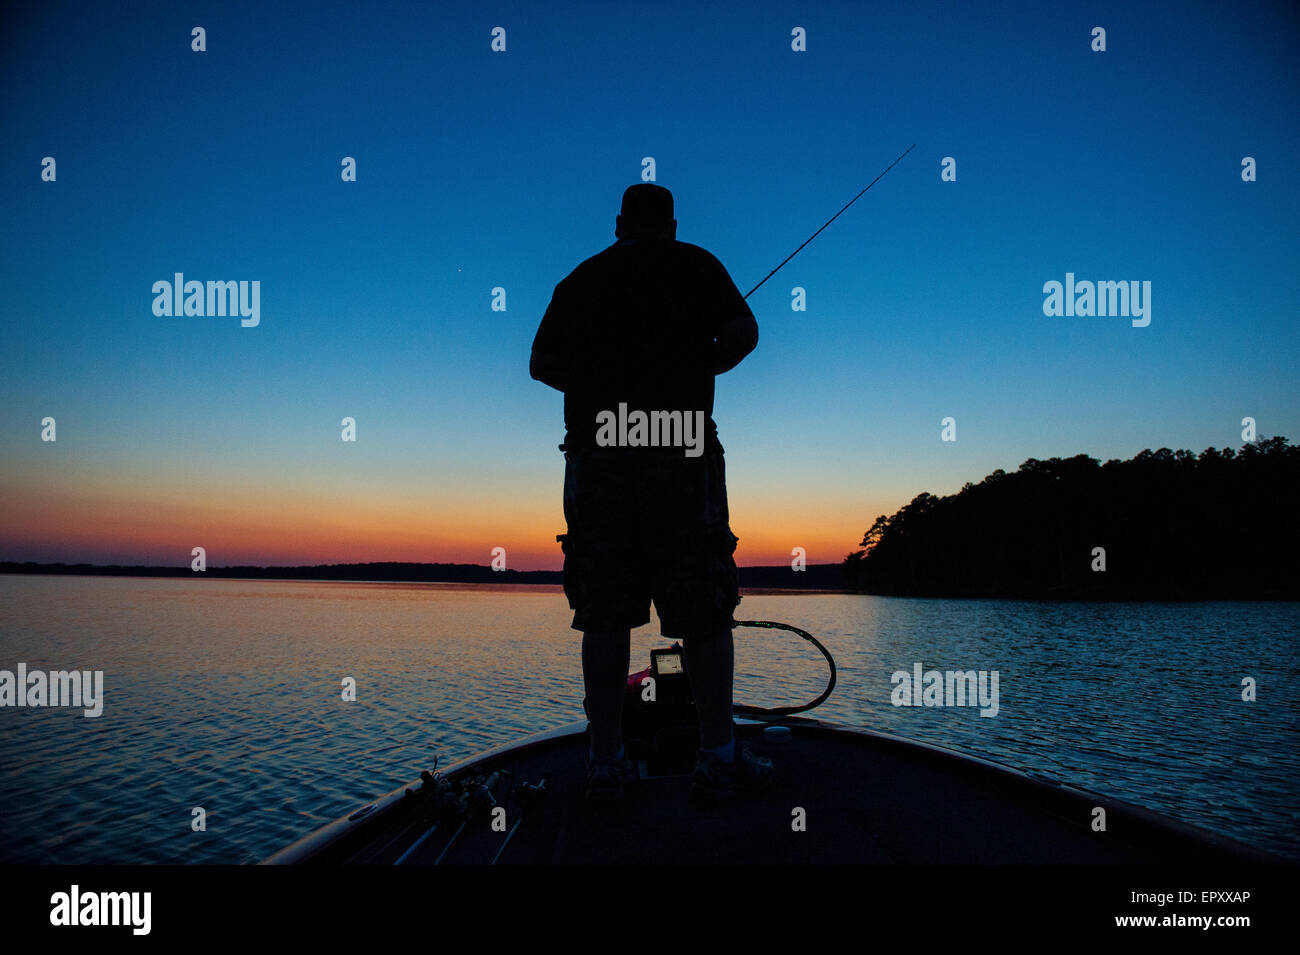 Fischer am Bug des Bass Boot Angeln bei Sonnenuntergang für forellenbarsch McGee Creek Lake in Oklahoma. Stockfoto